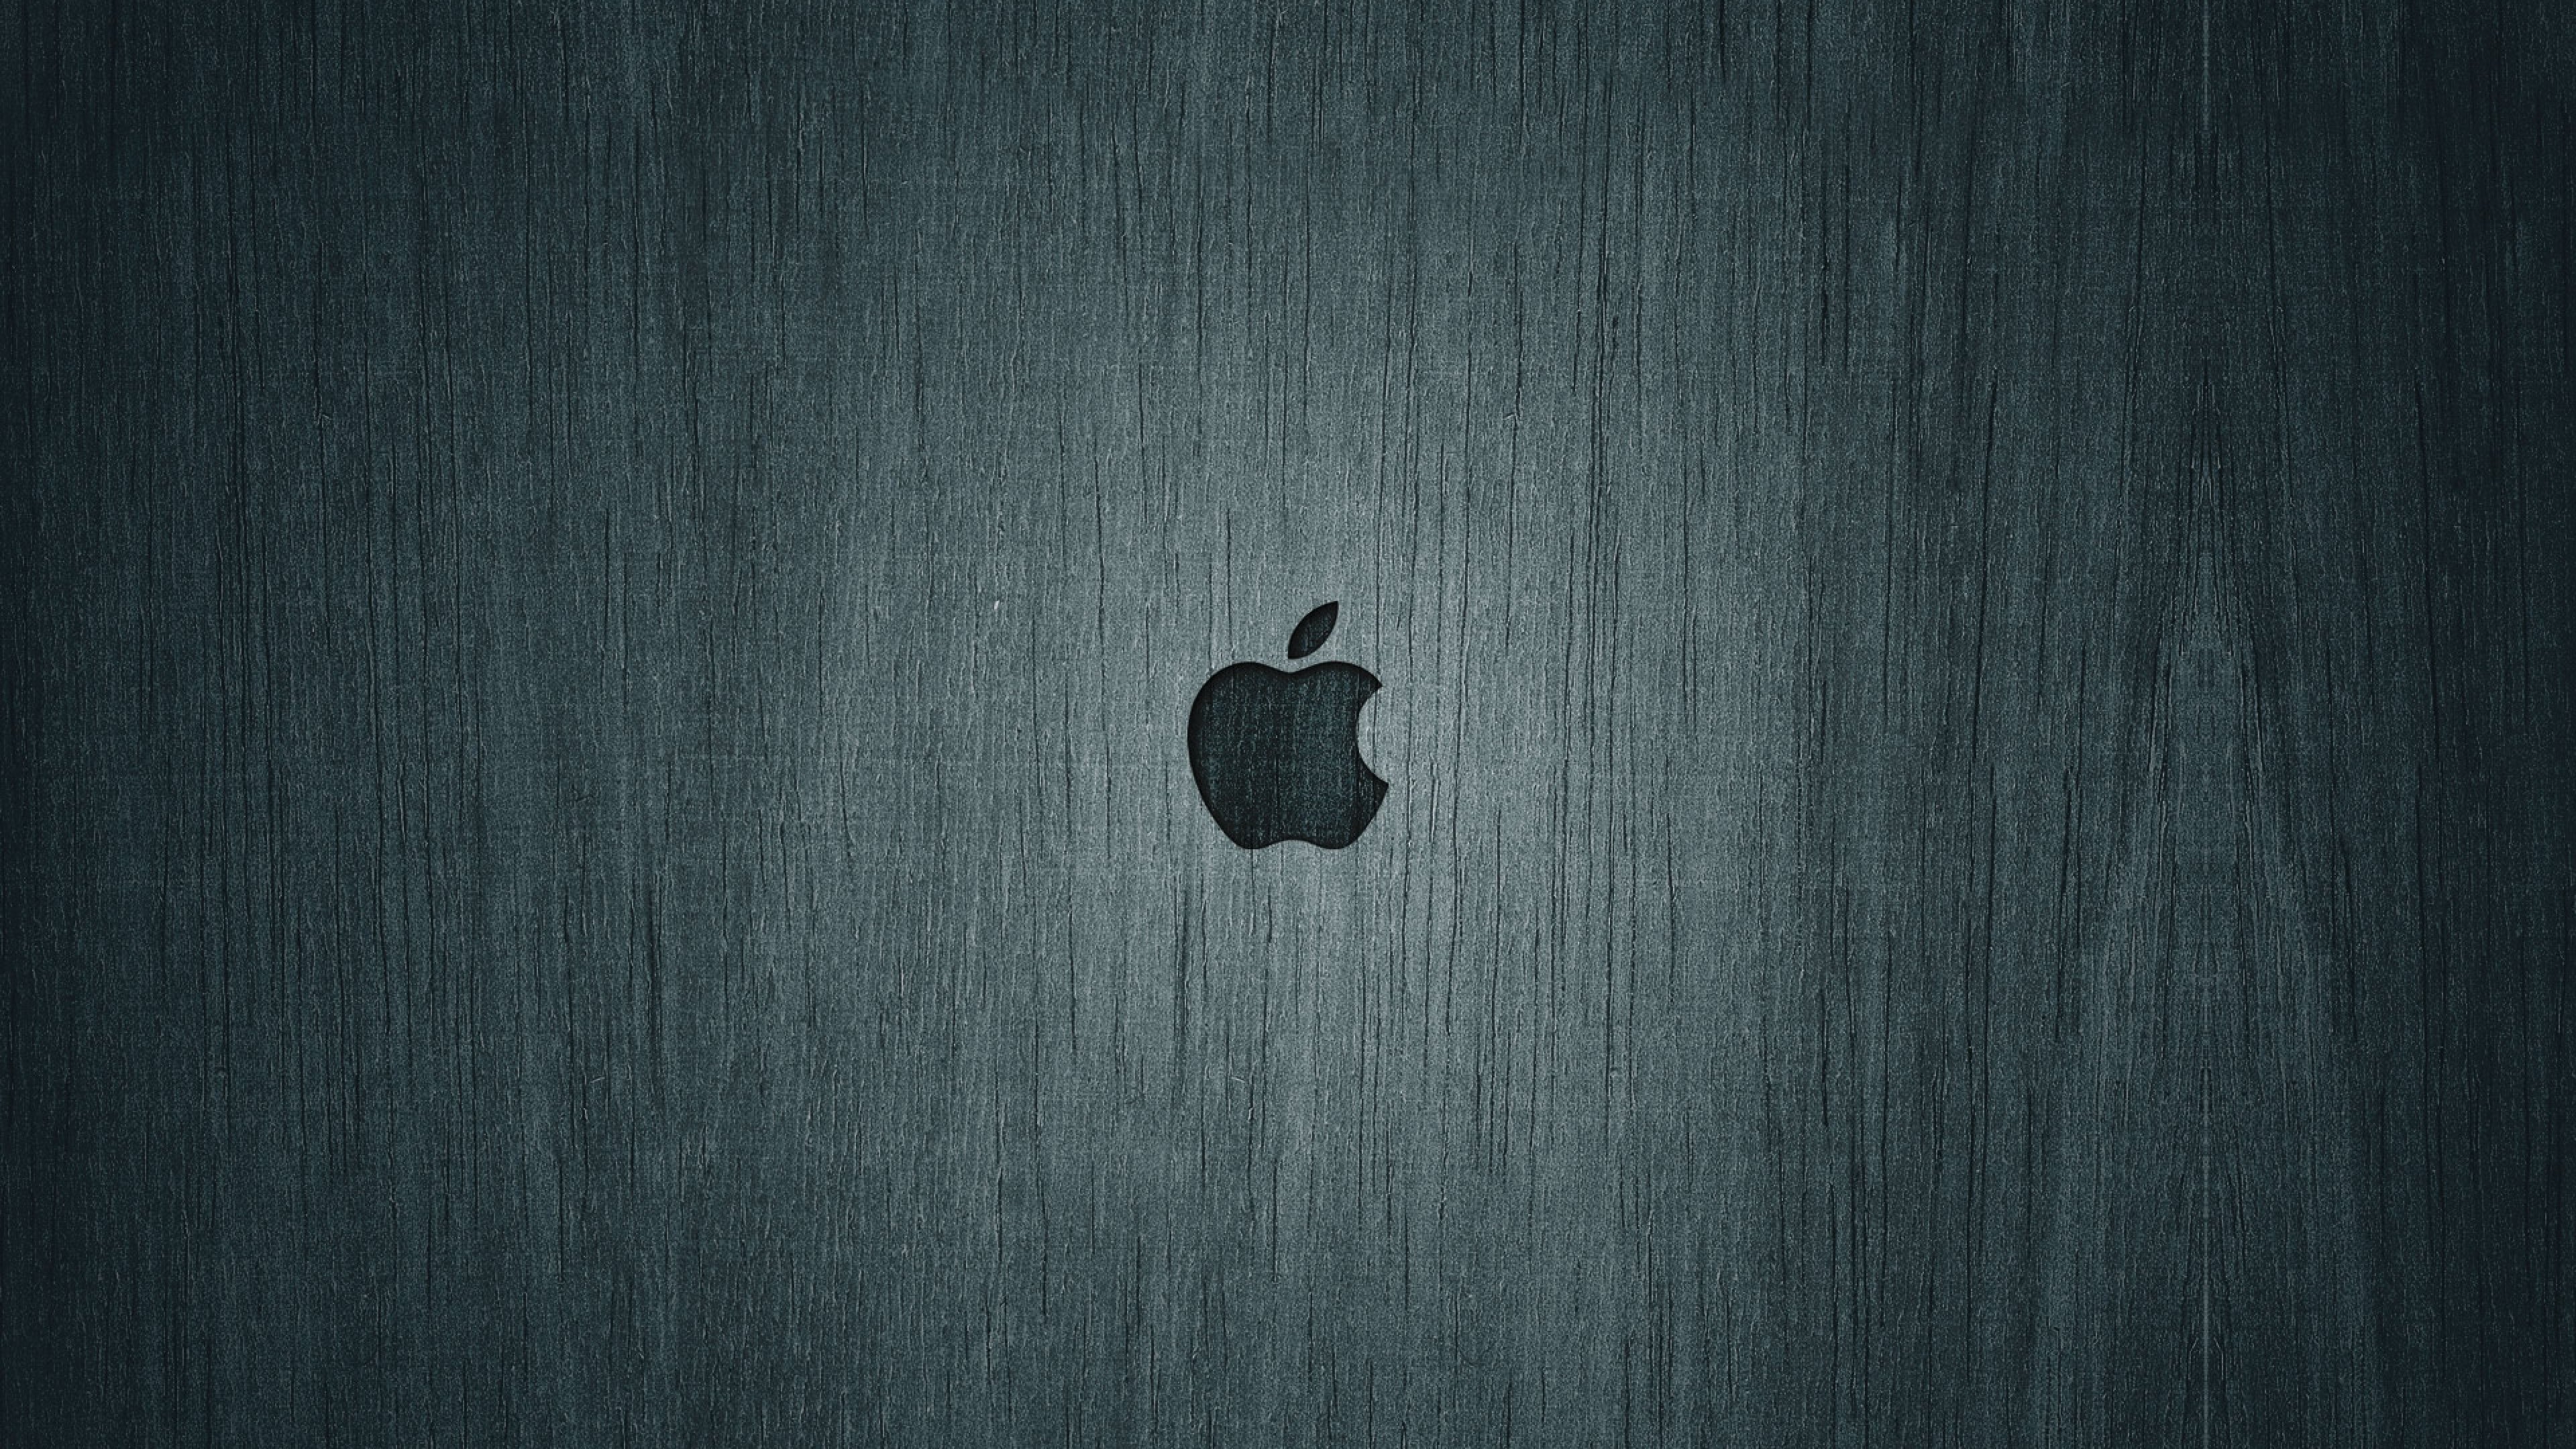  Apple Mac Background Black Brand Logo Wallpaper Background 4K 3840x2160